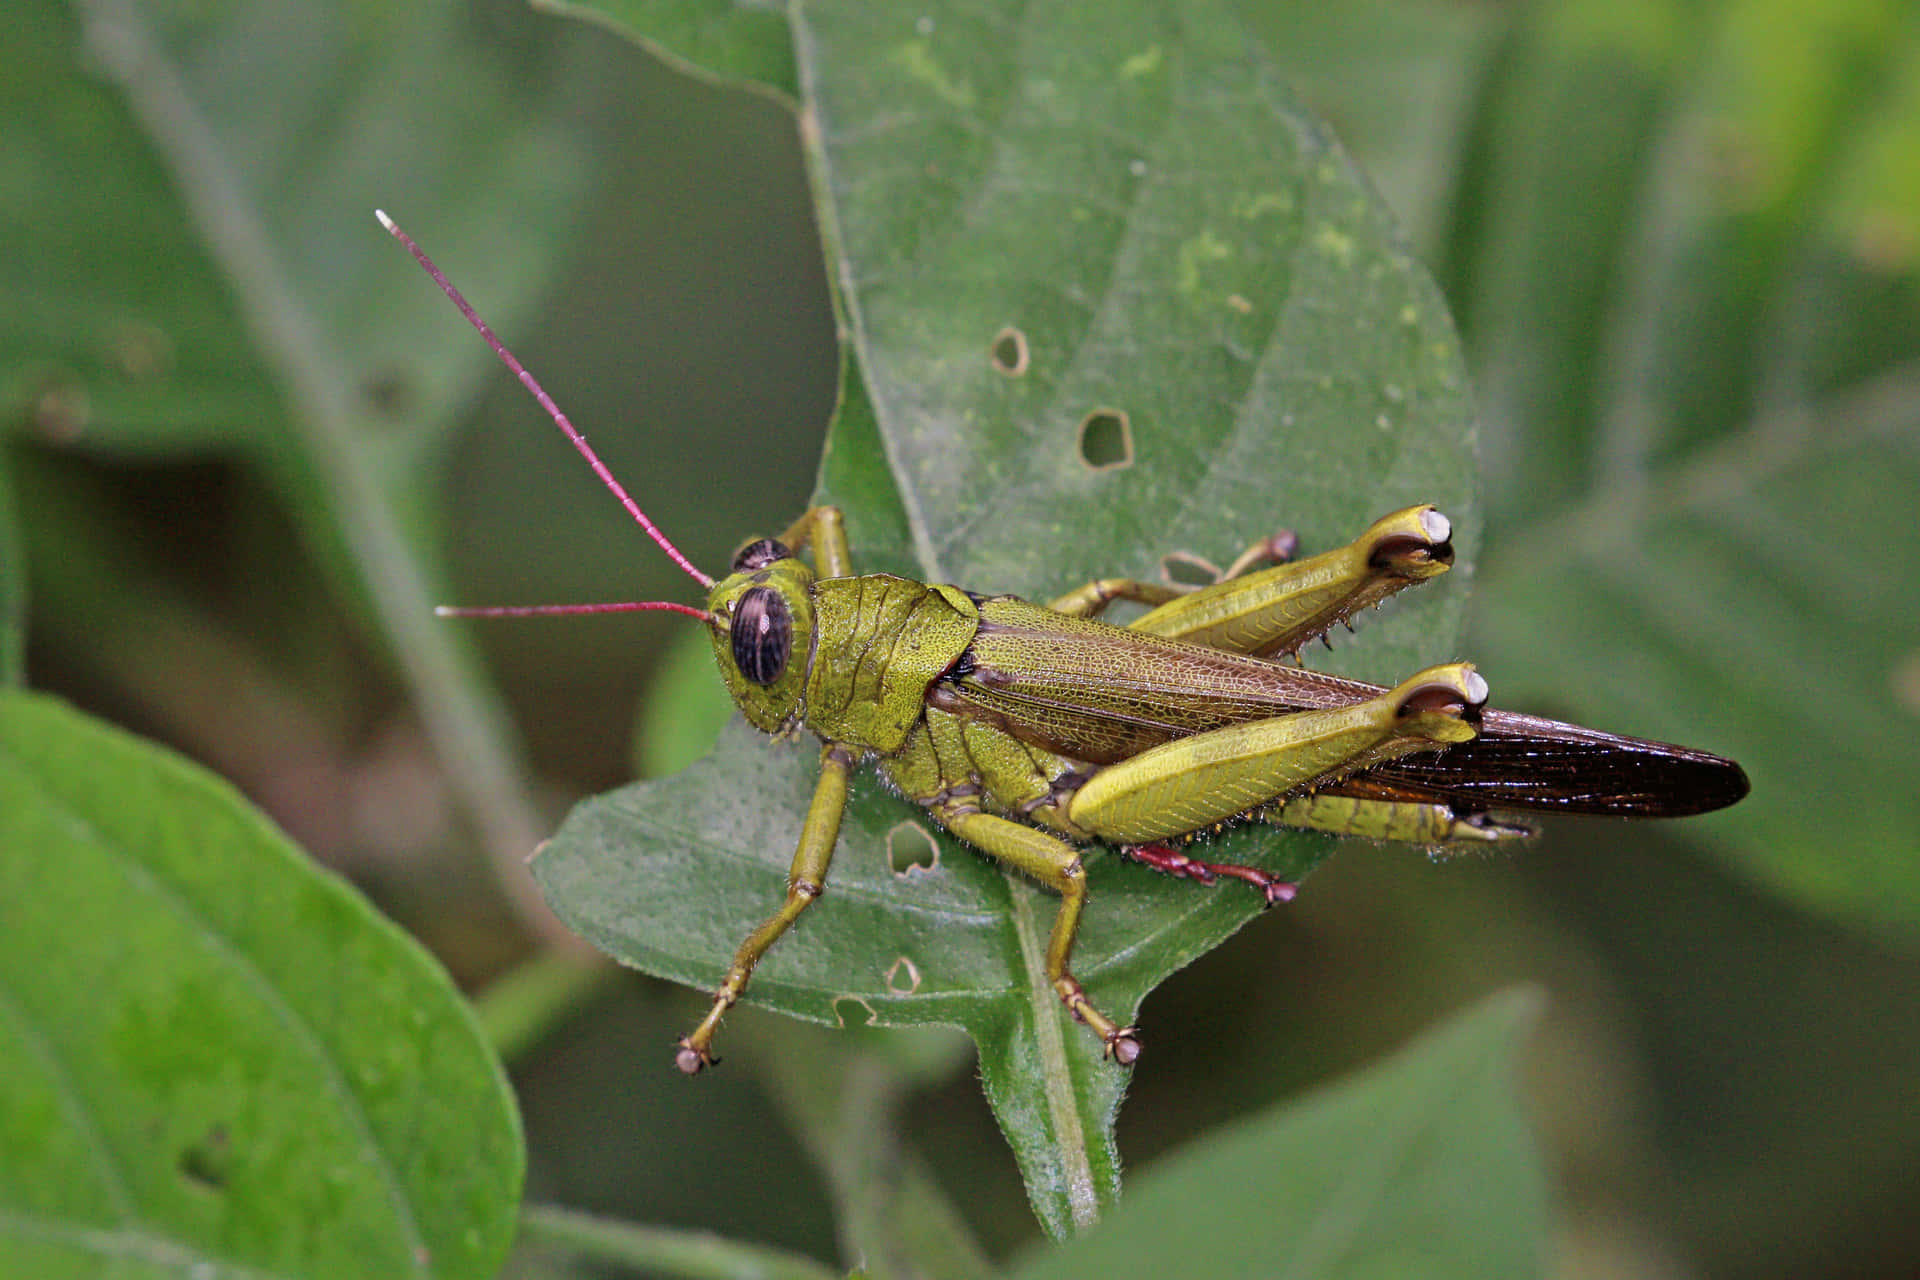 Close-Up of a Green Grasshopper